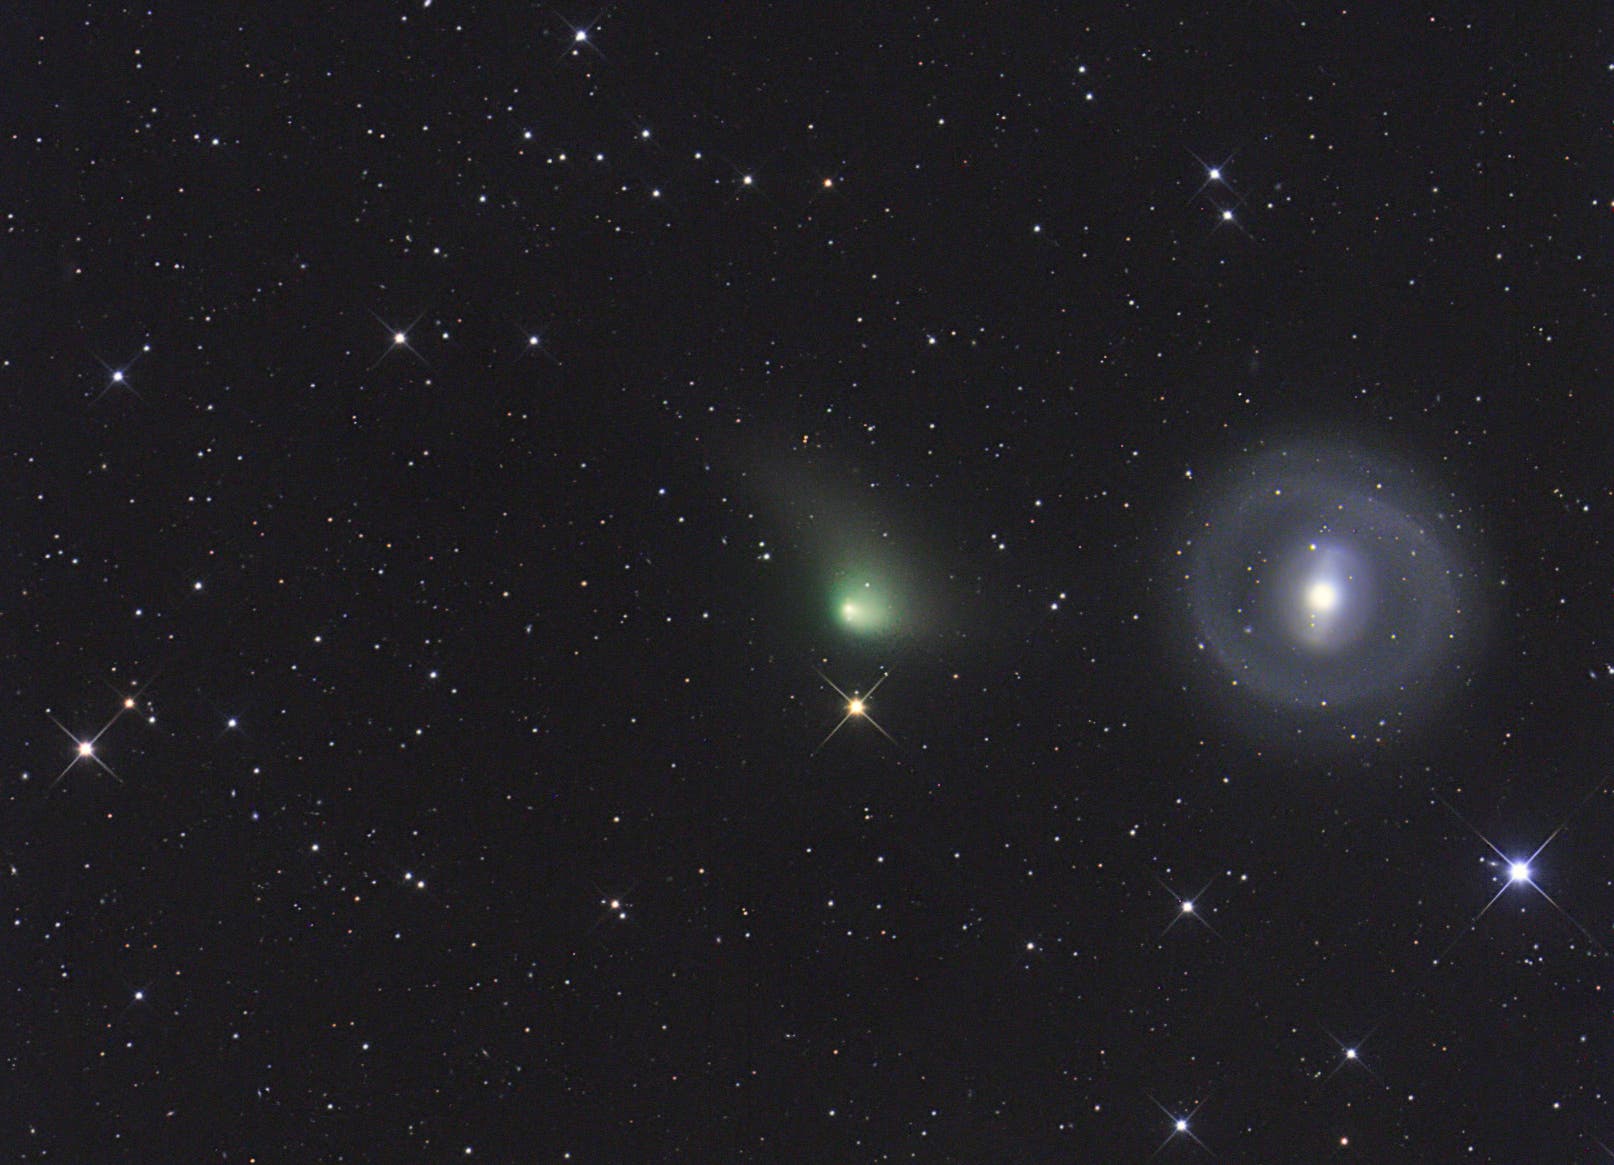 Komet C/2013 A1 Siding Spring bei Galaxie NGC 1291